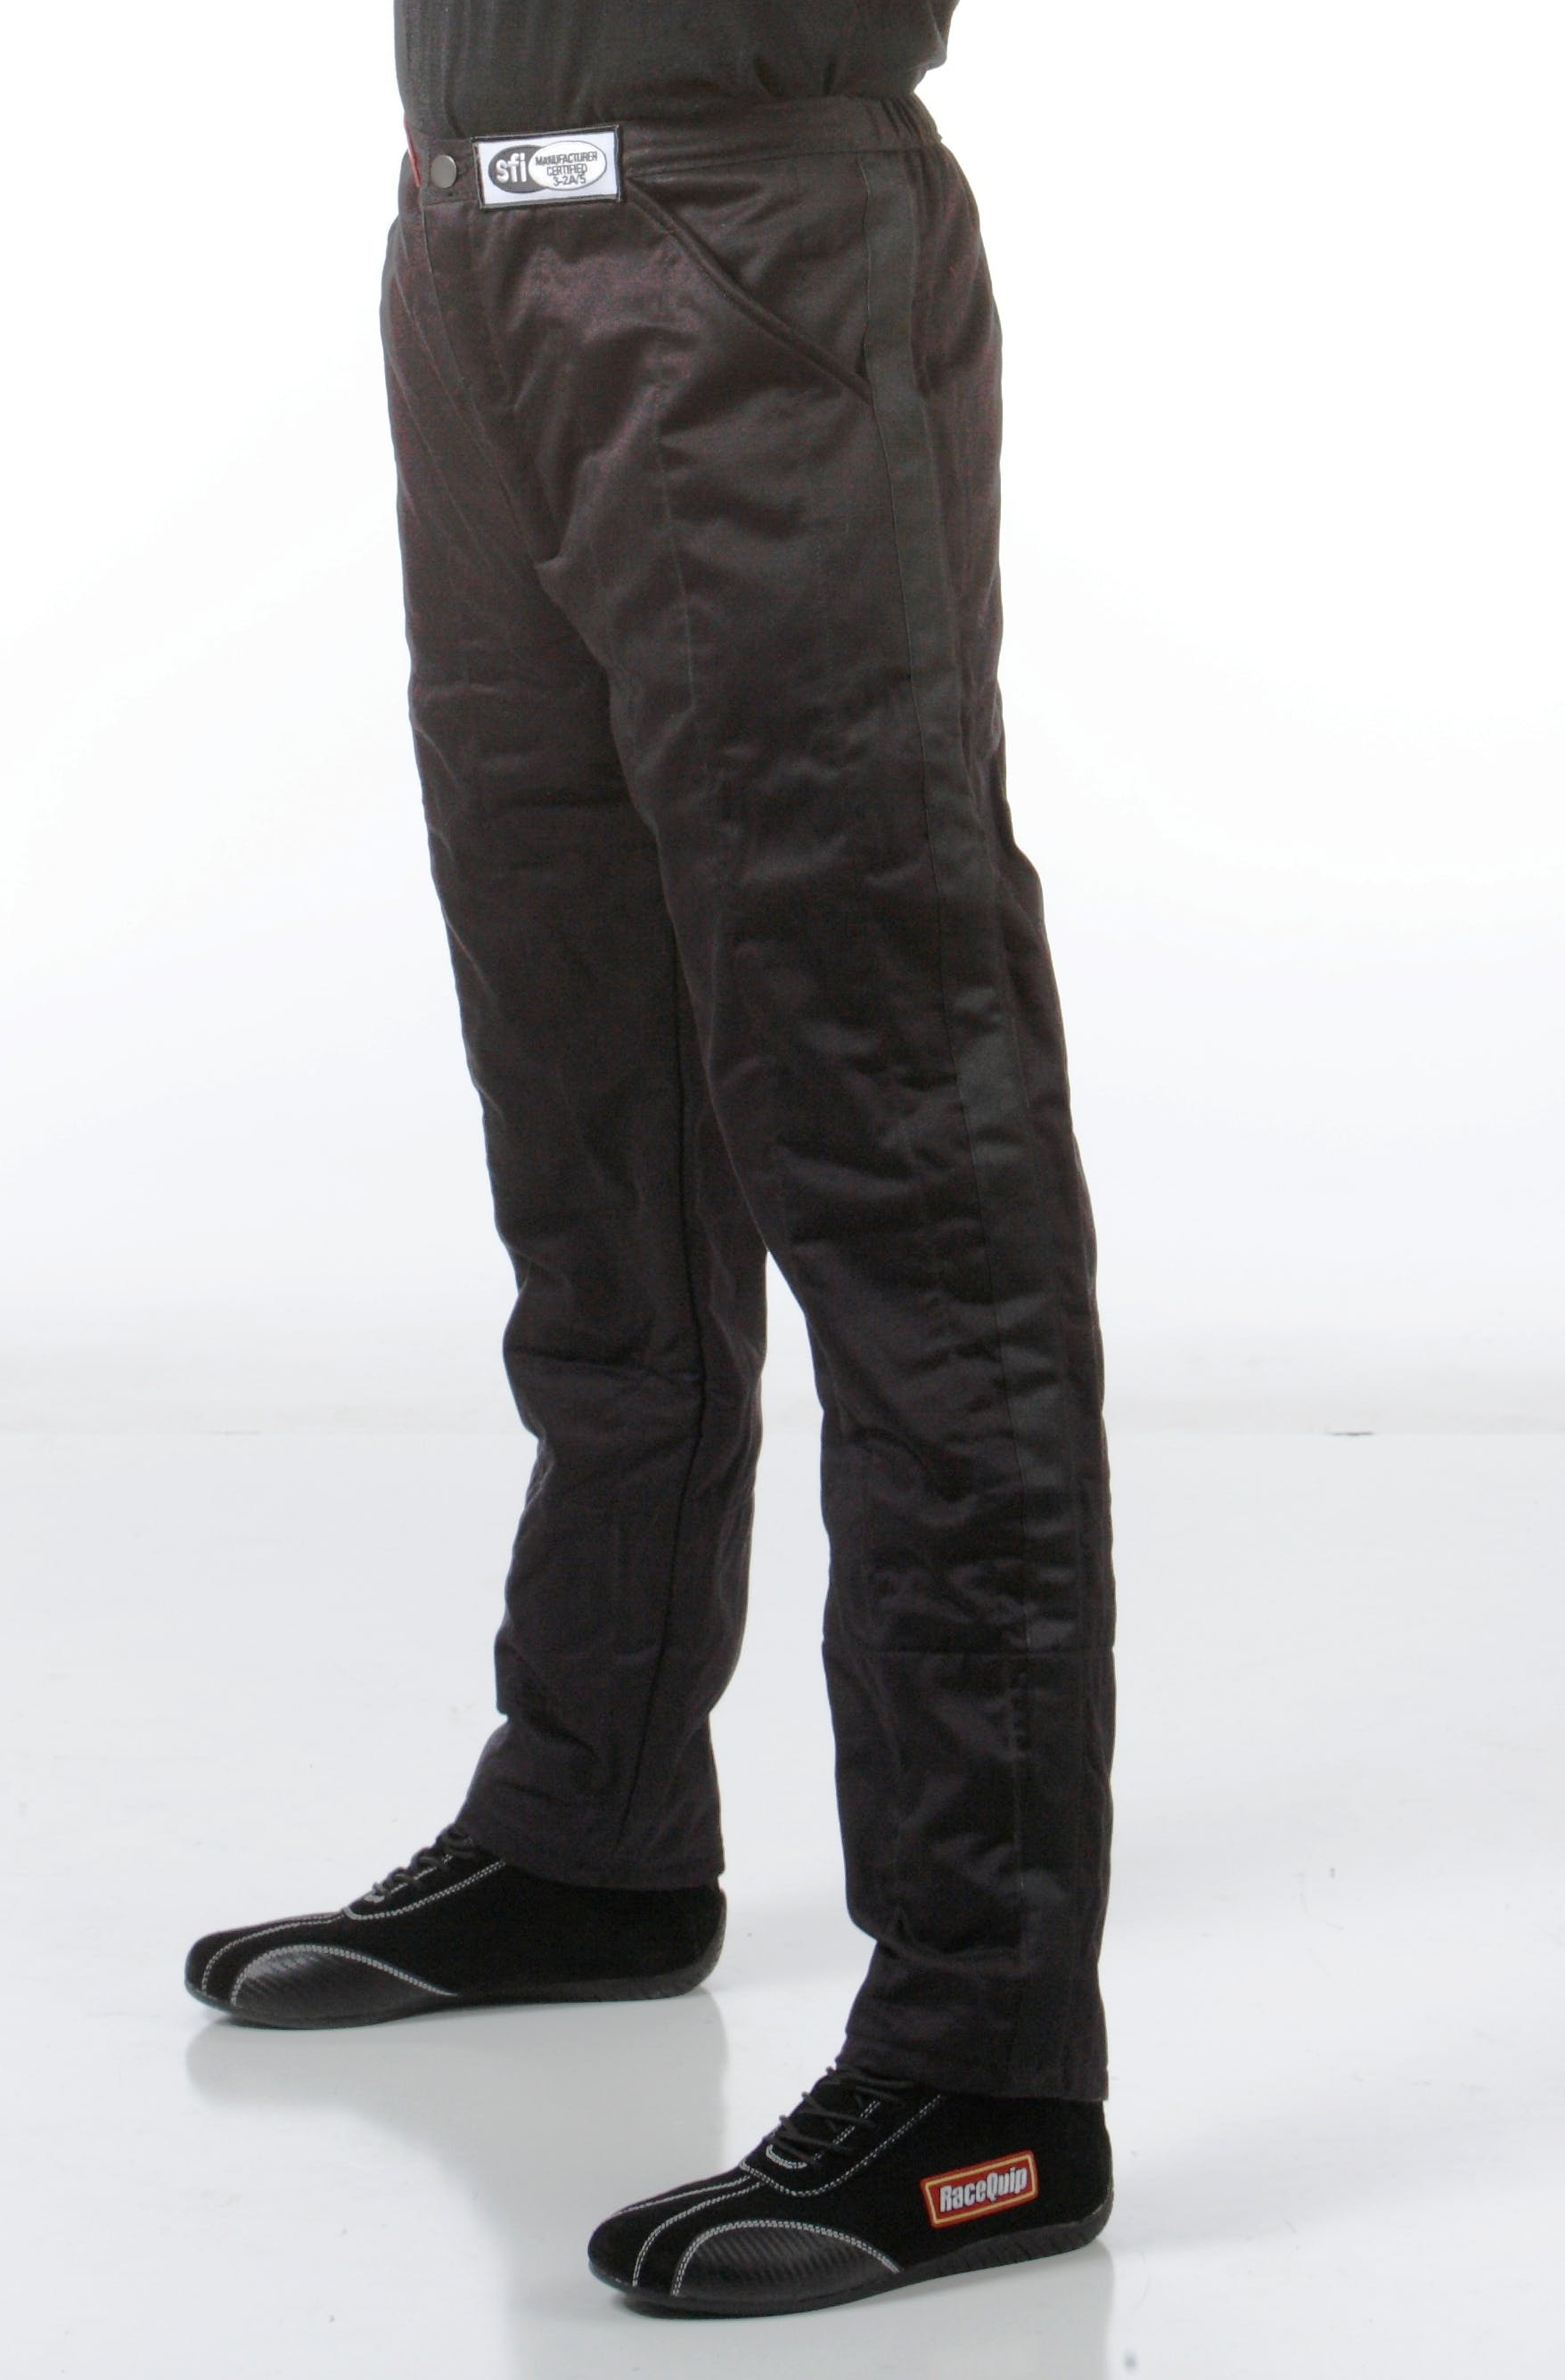 RaceQuip 122007 SFI-5 Pyrovatex Multi-Layer Racing Fire Pants (Black, XX-Large)